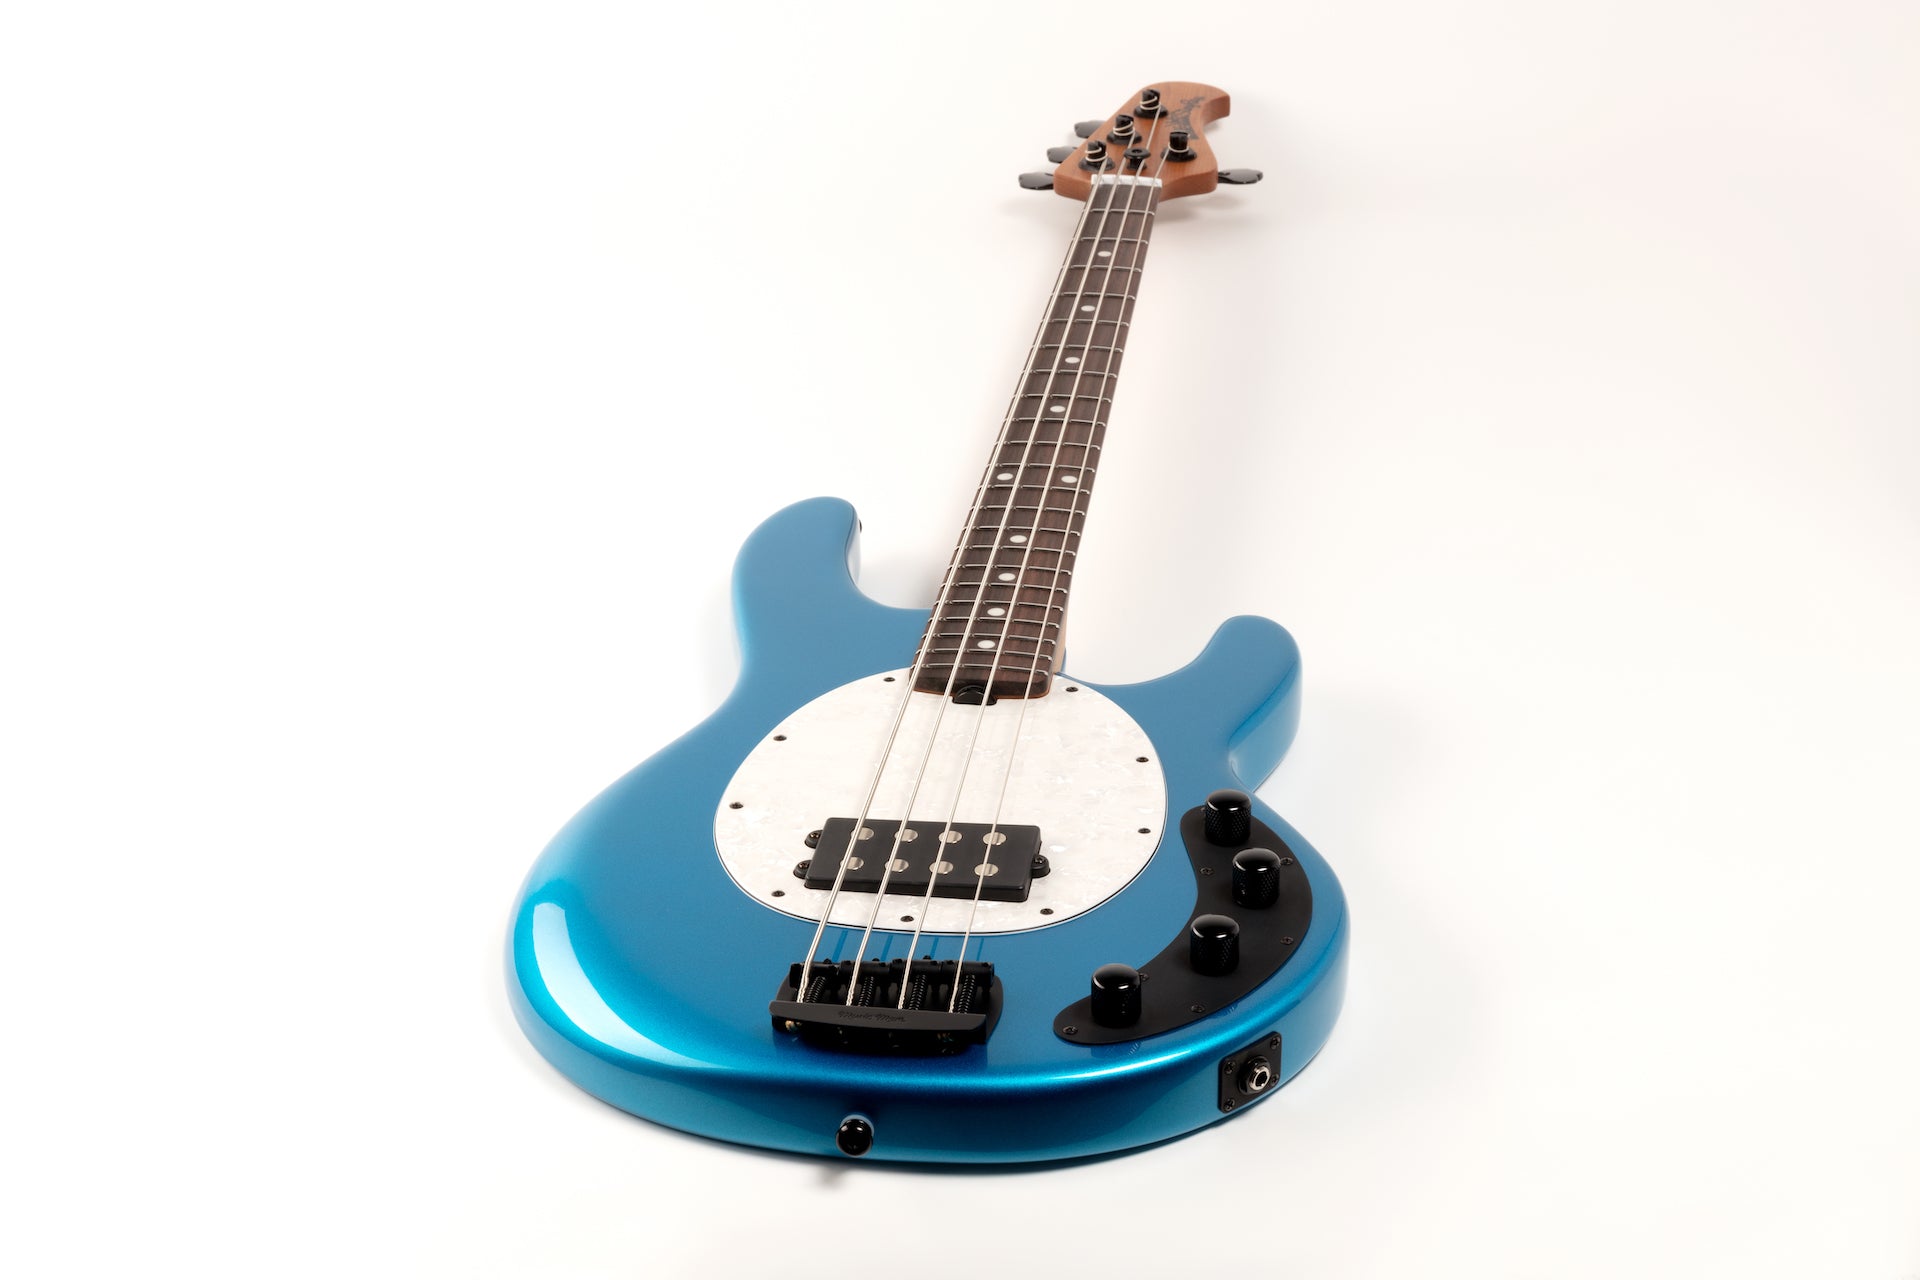 Ernie Ball Music Man StingRay Special 4 H Bass Guitar - Speed Blue with Rosewood Fingerboard F96542 - HIENDGUITAR   Musicman bass